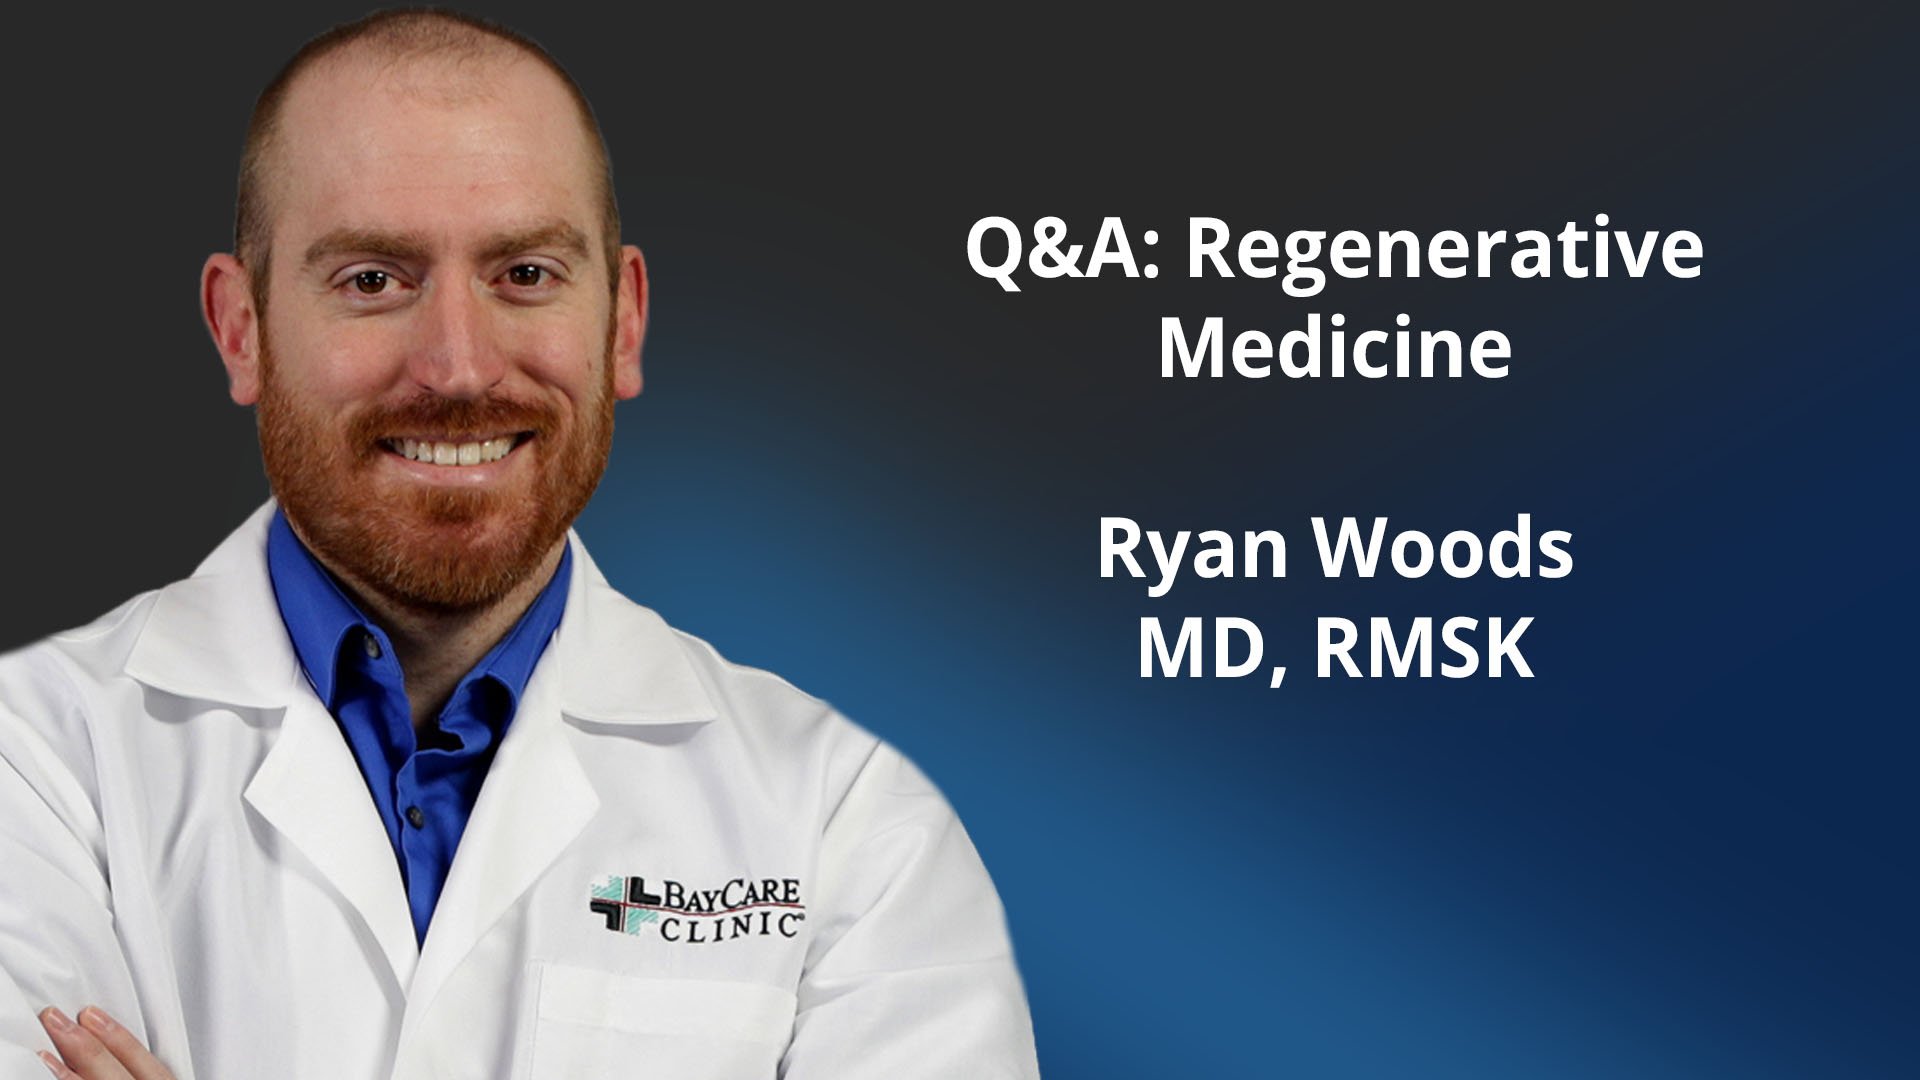 WATCH: Dr. Woods discusses regenerative medicine